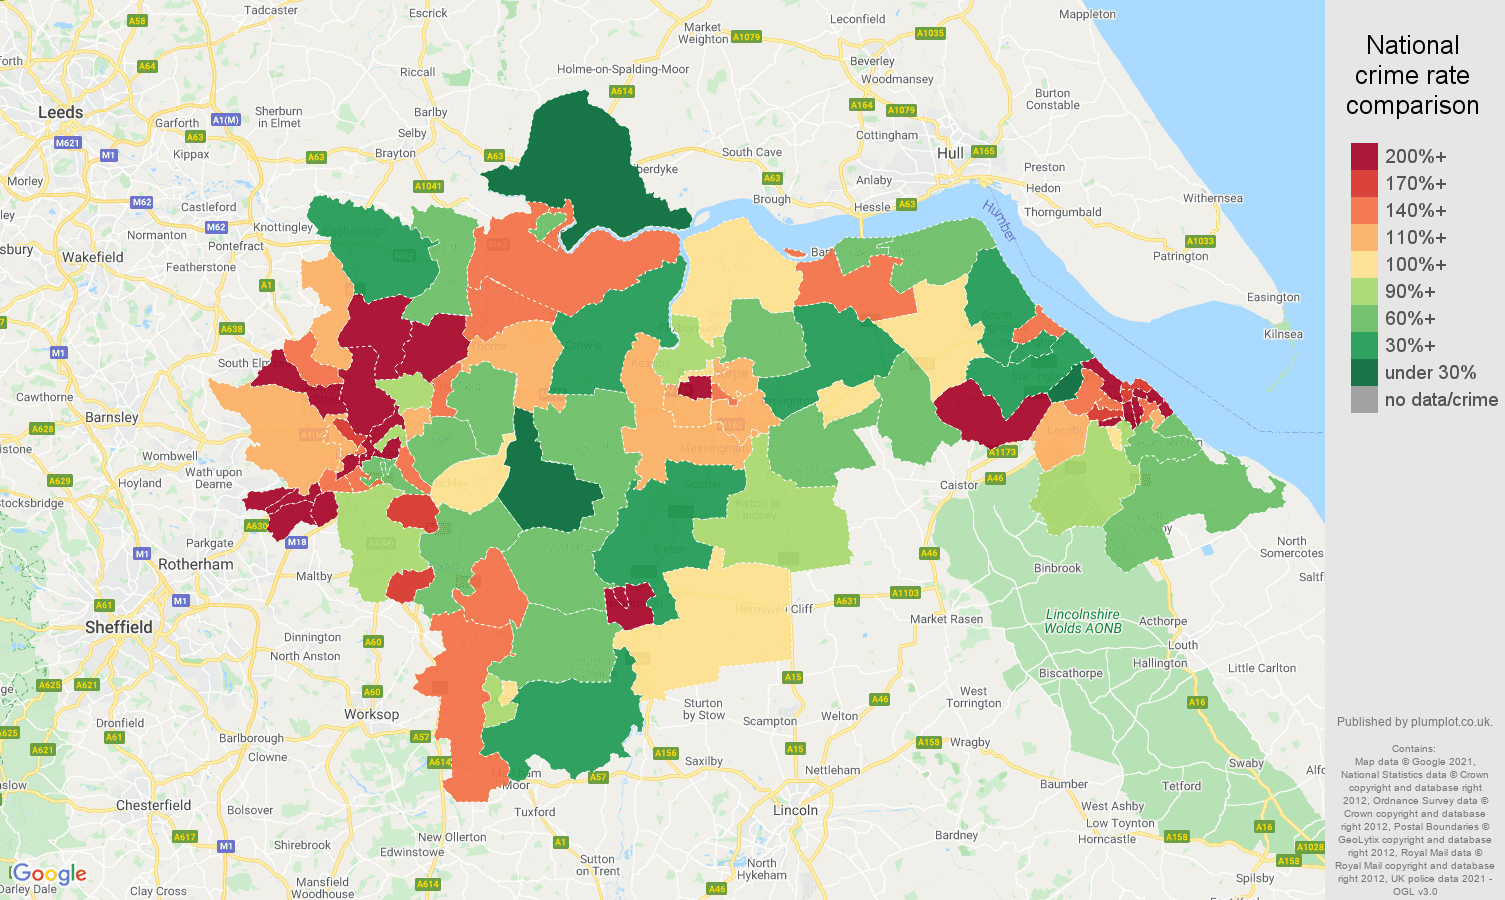 Doncaster criminal damage and arson crime rate comparison map